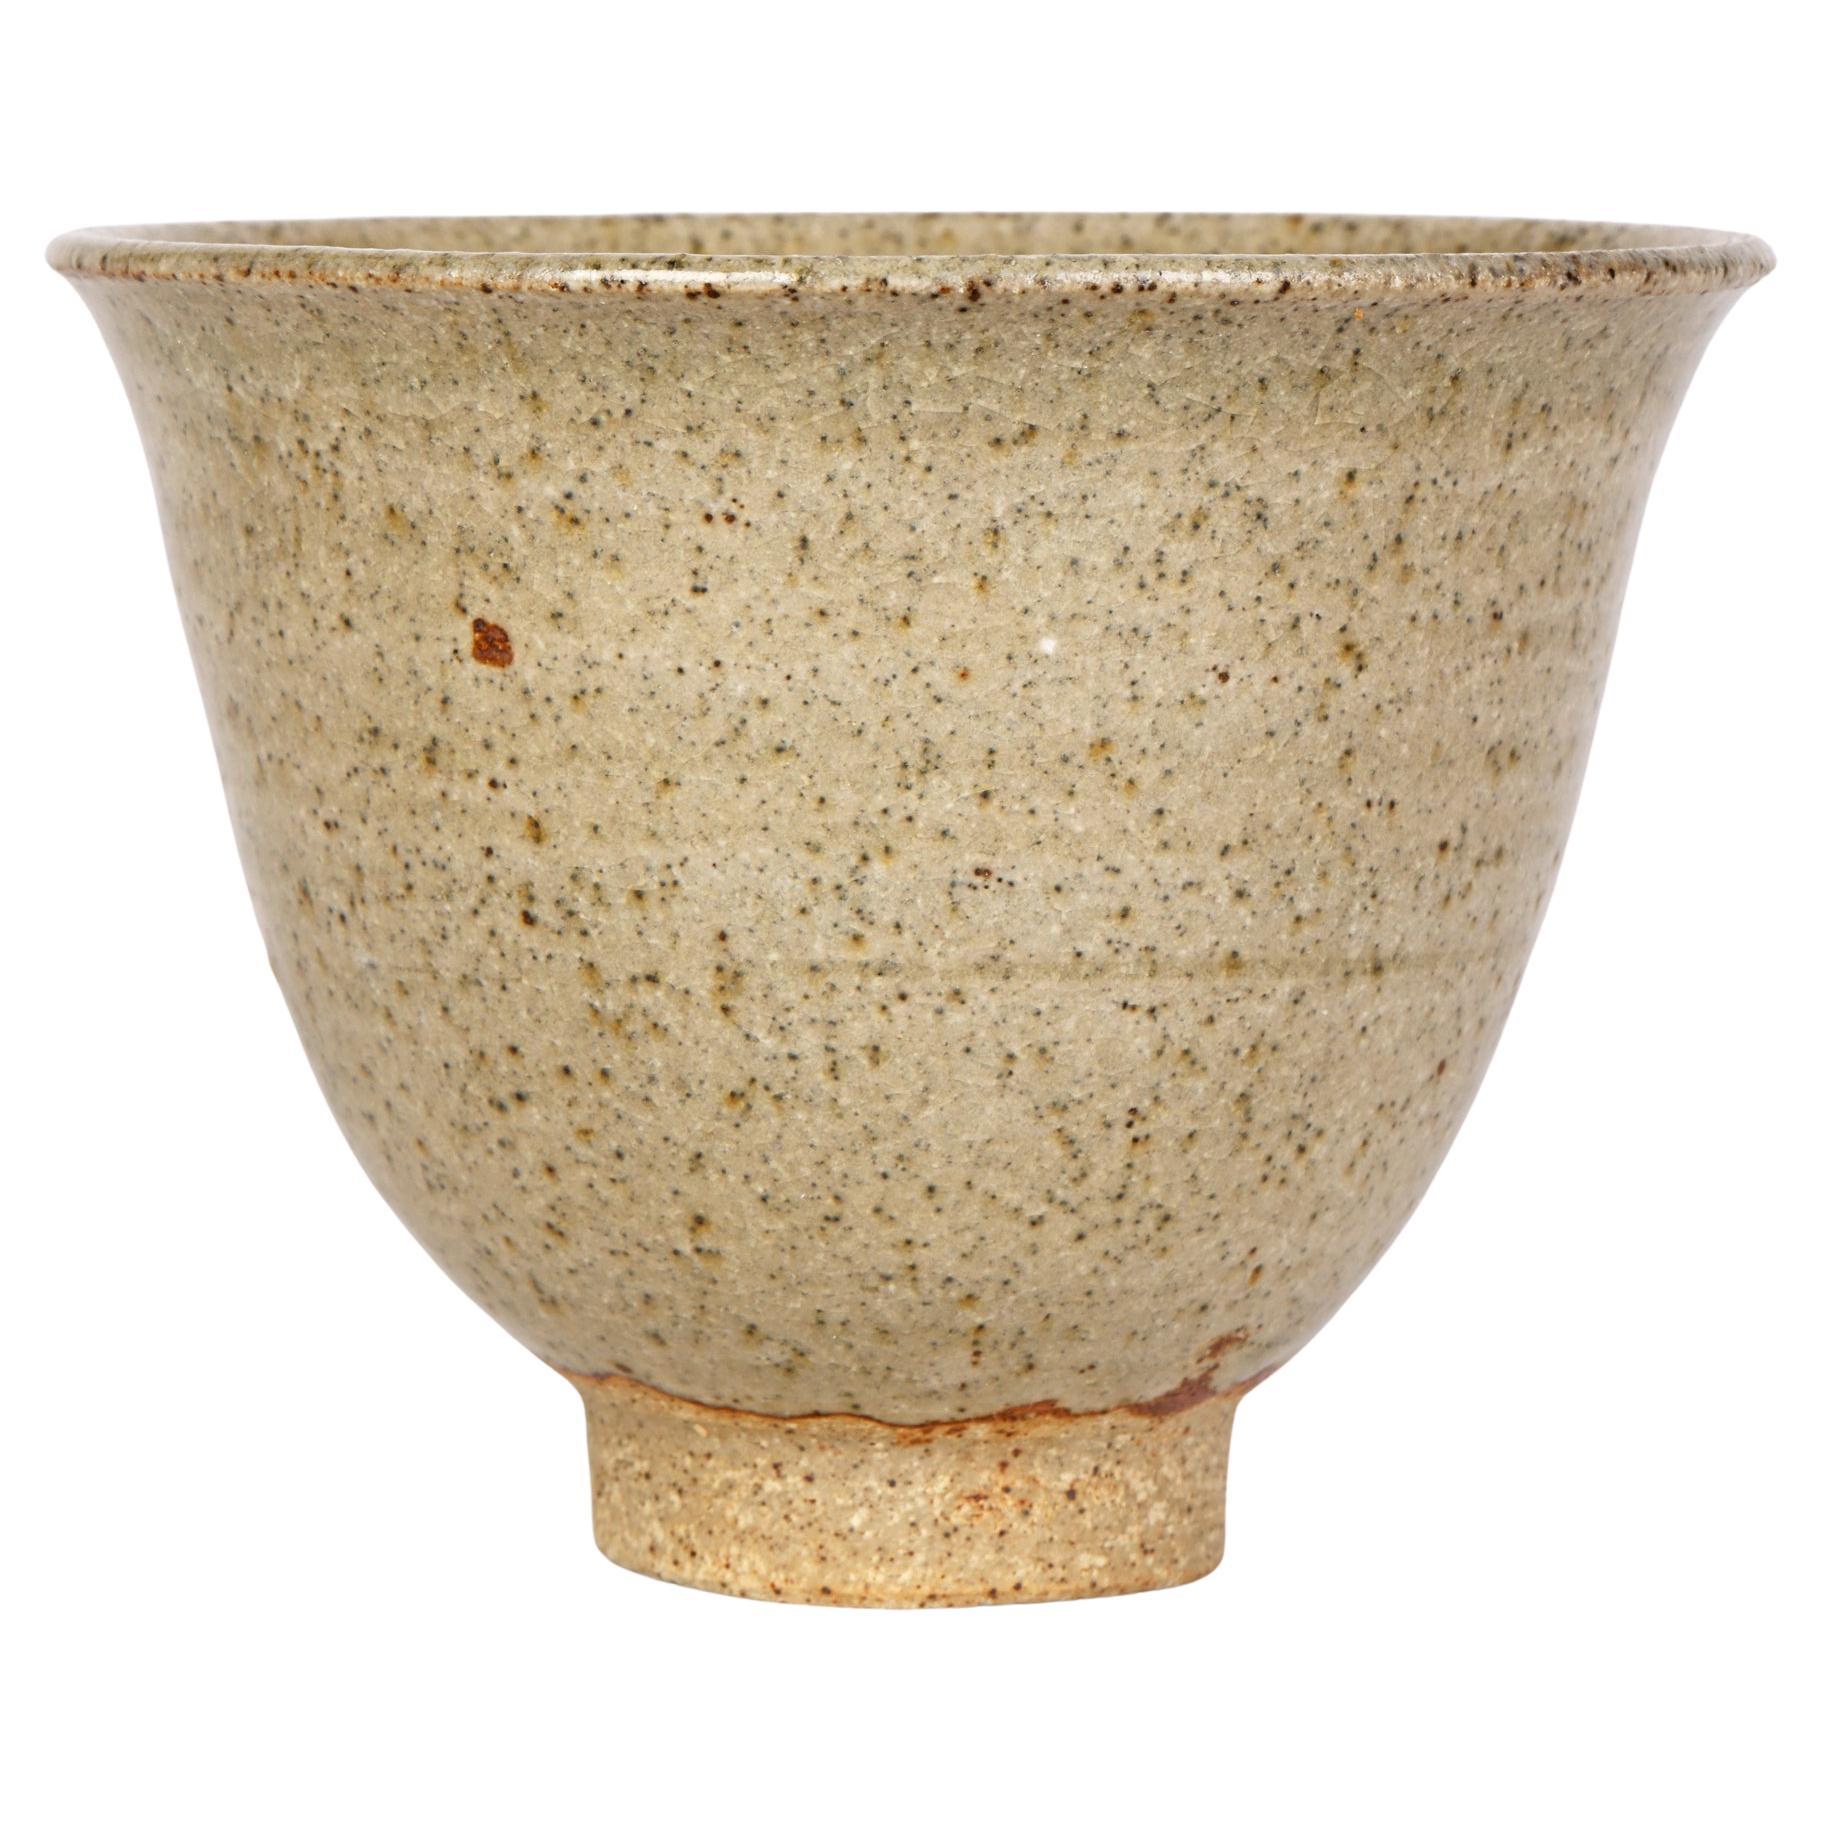 Eric James Mellon Studio Pottery Experimental Glazed Cup, 2006  For Sale